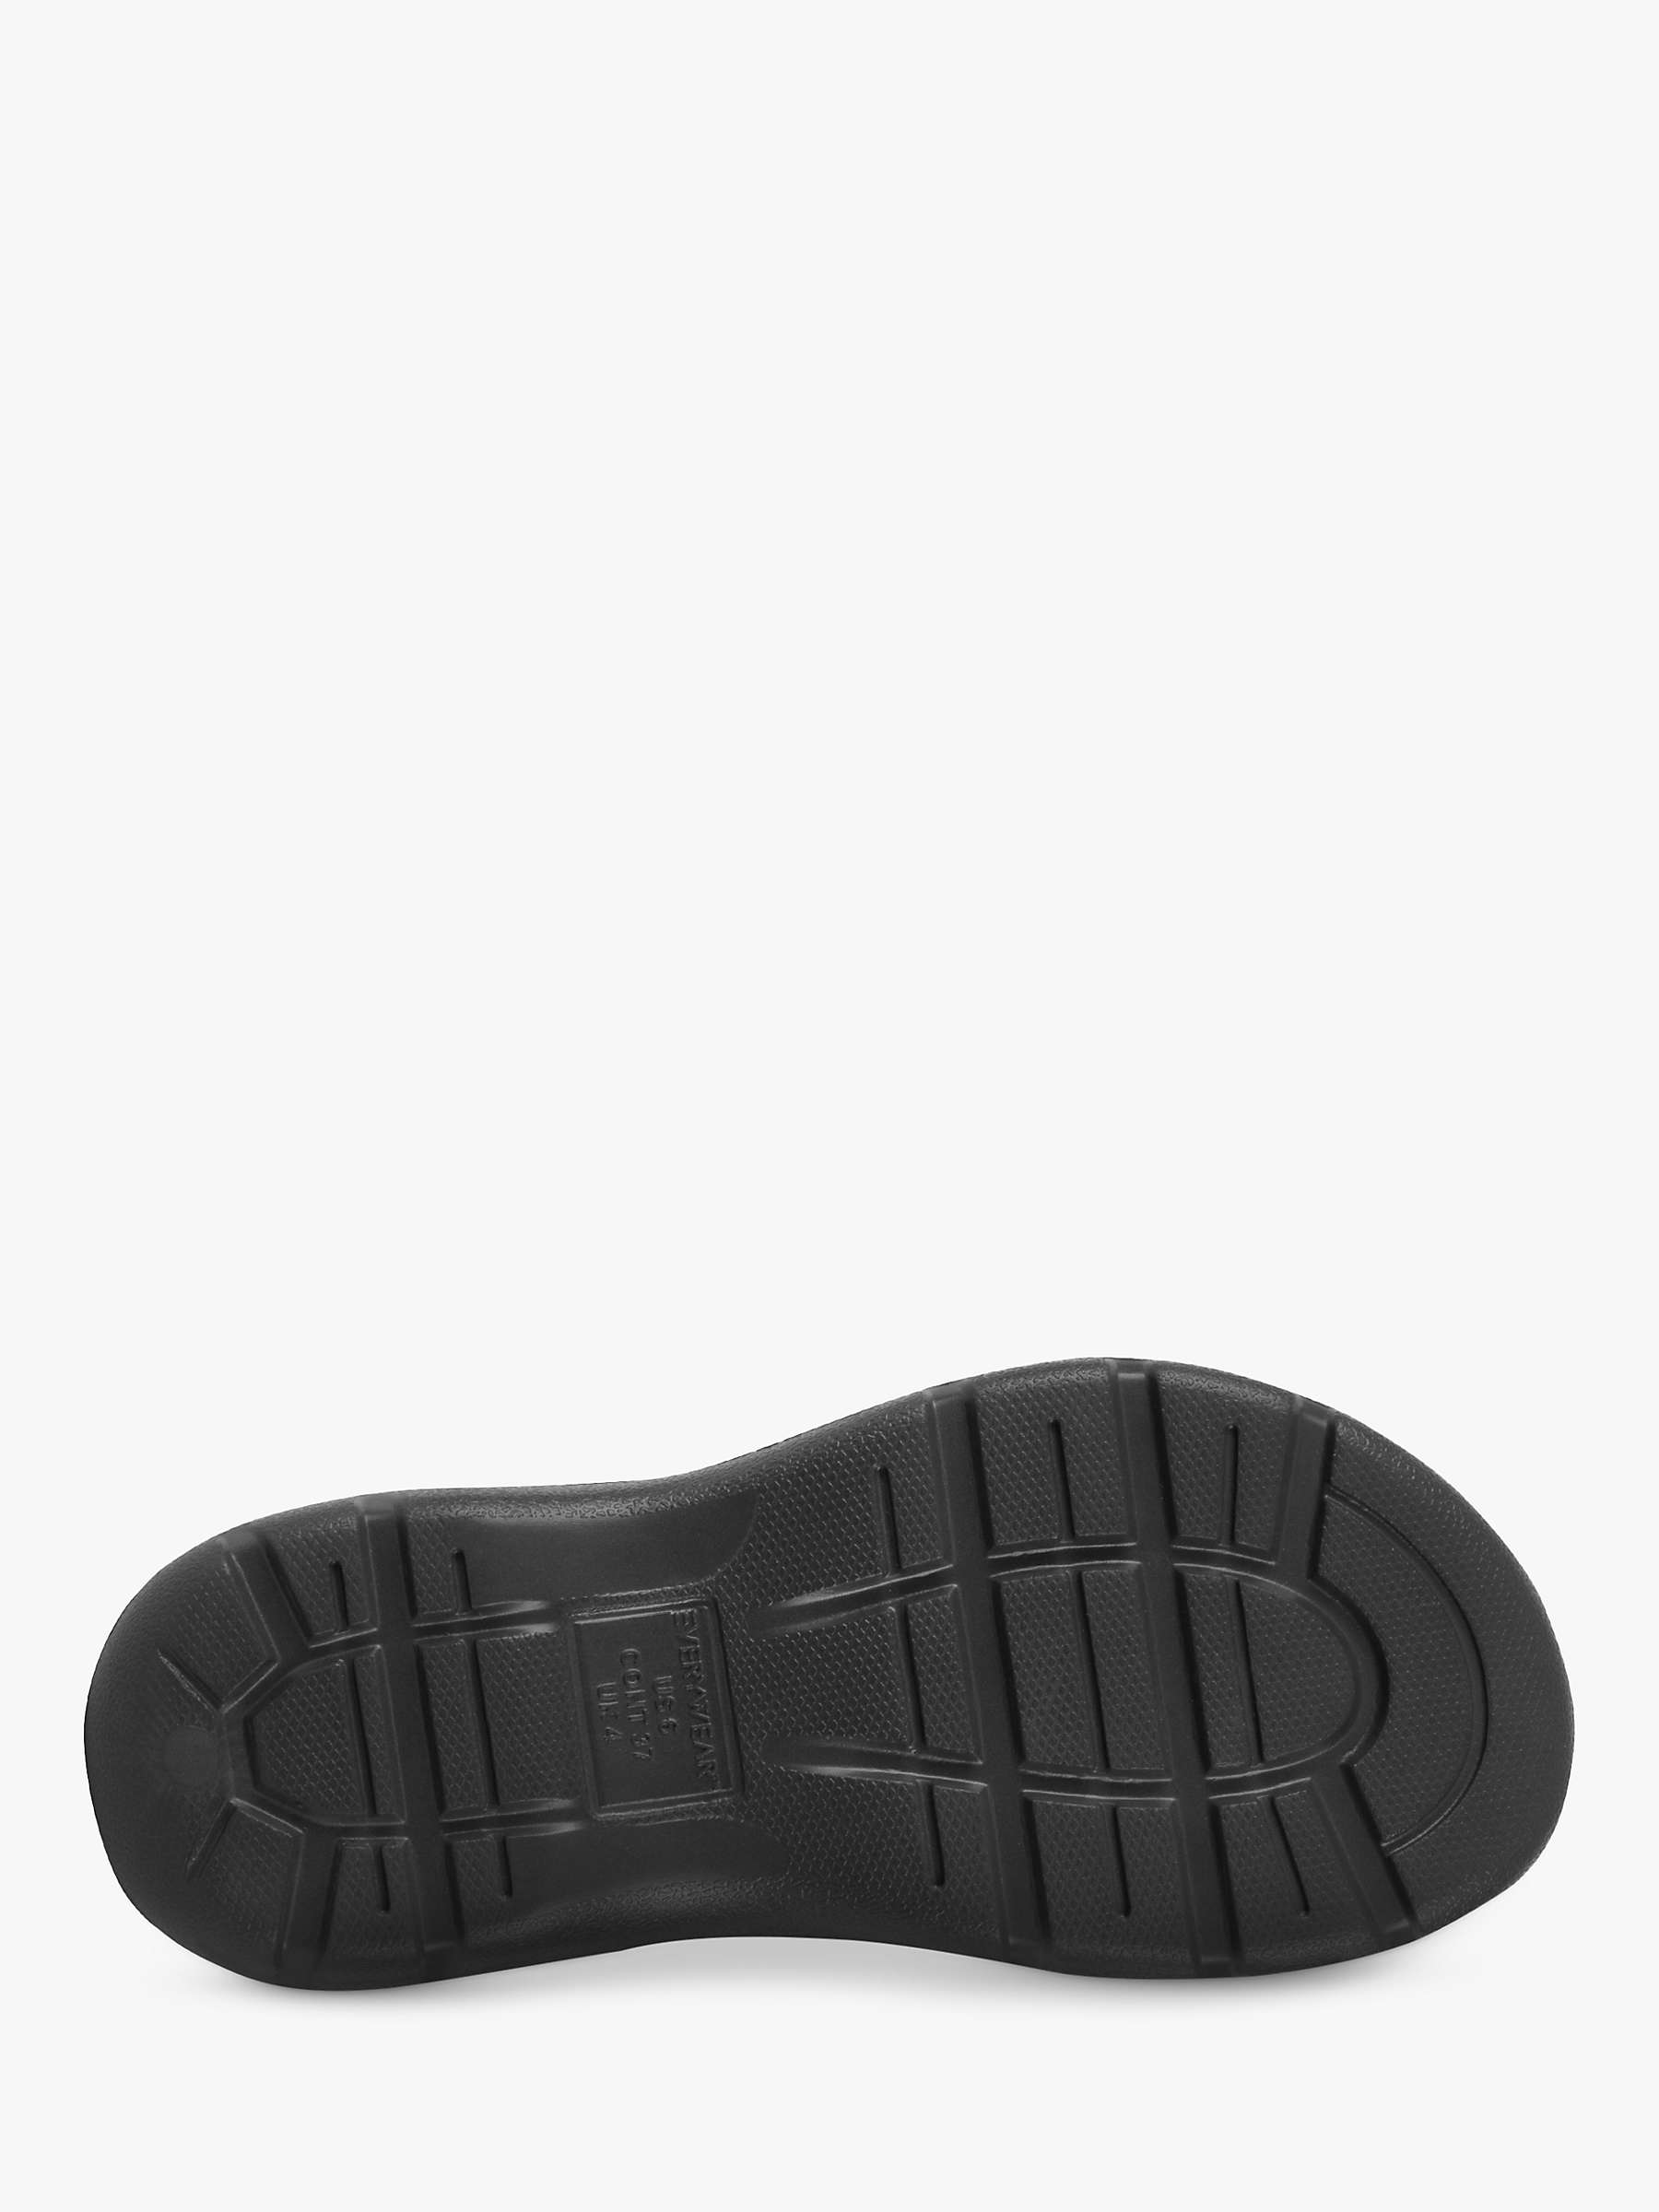 Buy totes Ladies SOLBOUNCE Riley Adjustable Sport Sandals Online at johnlewis.com